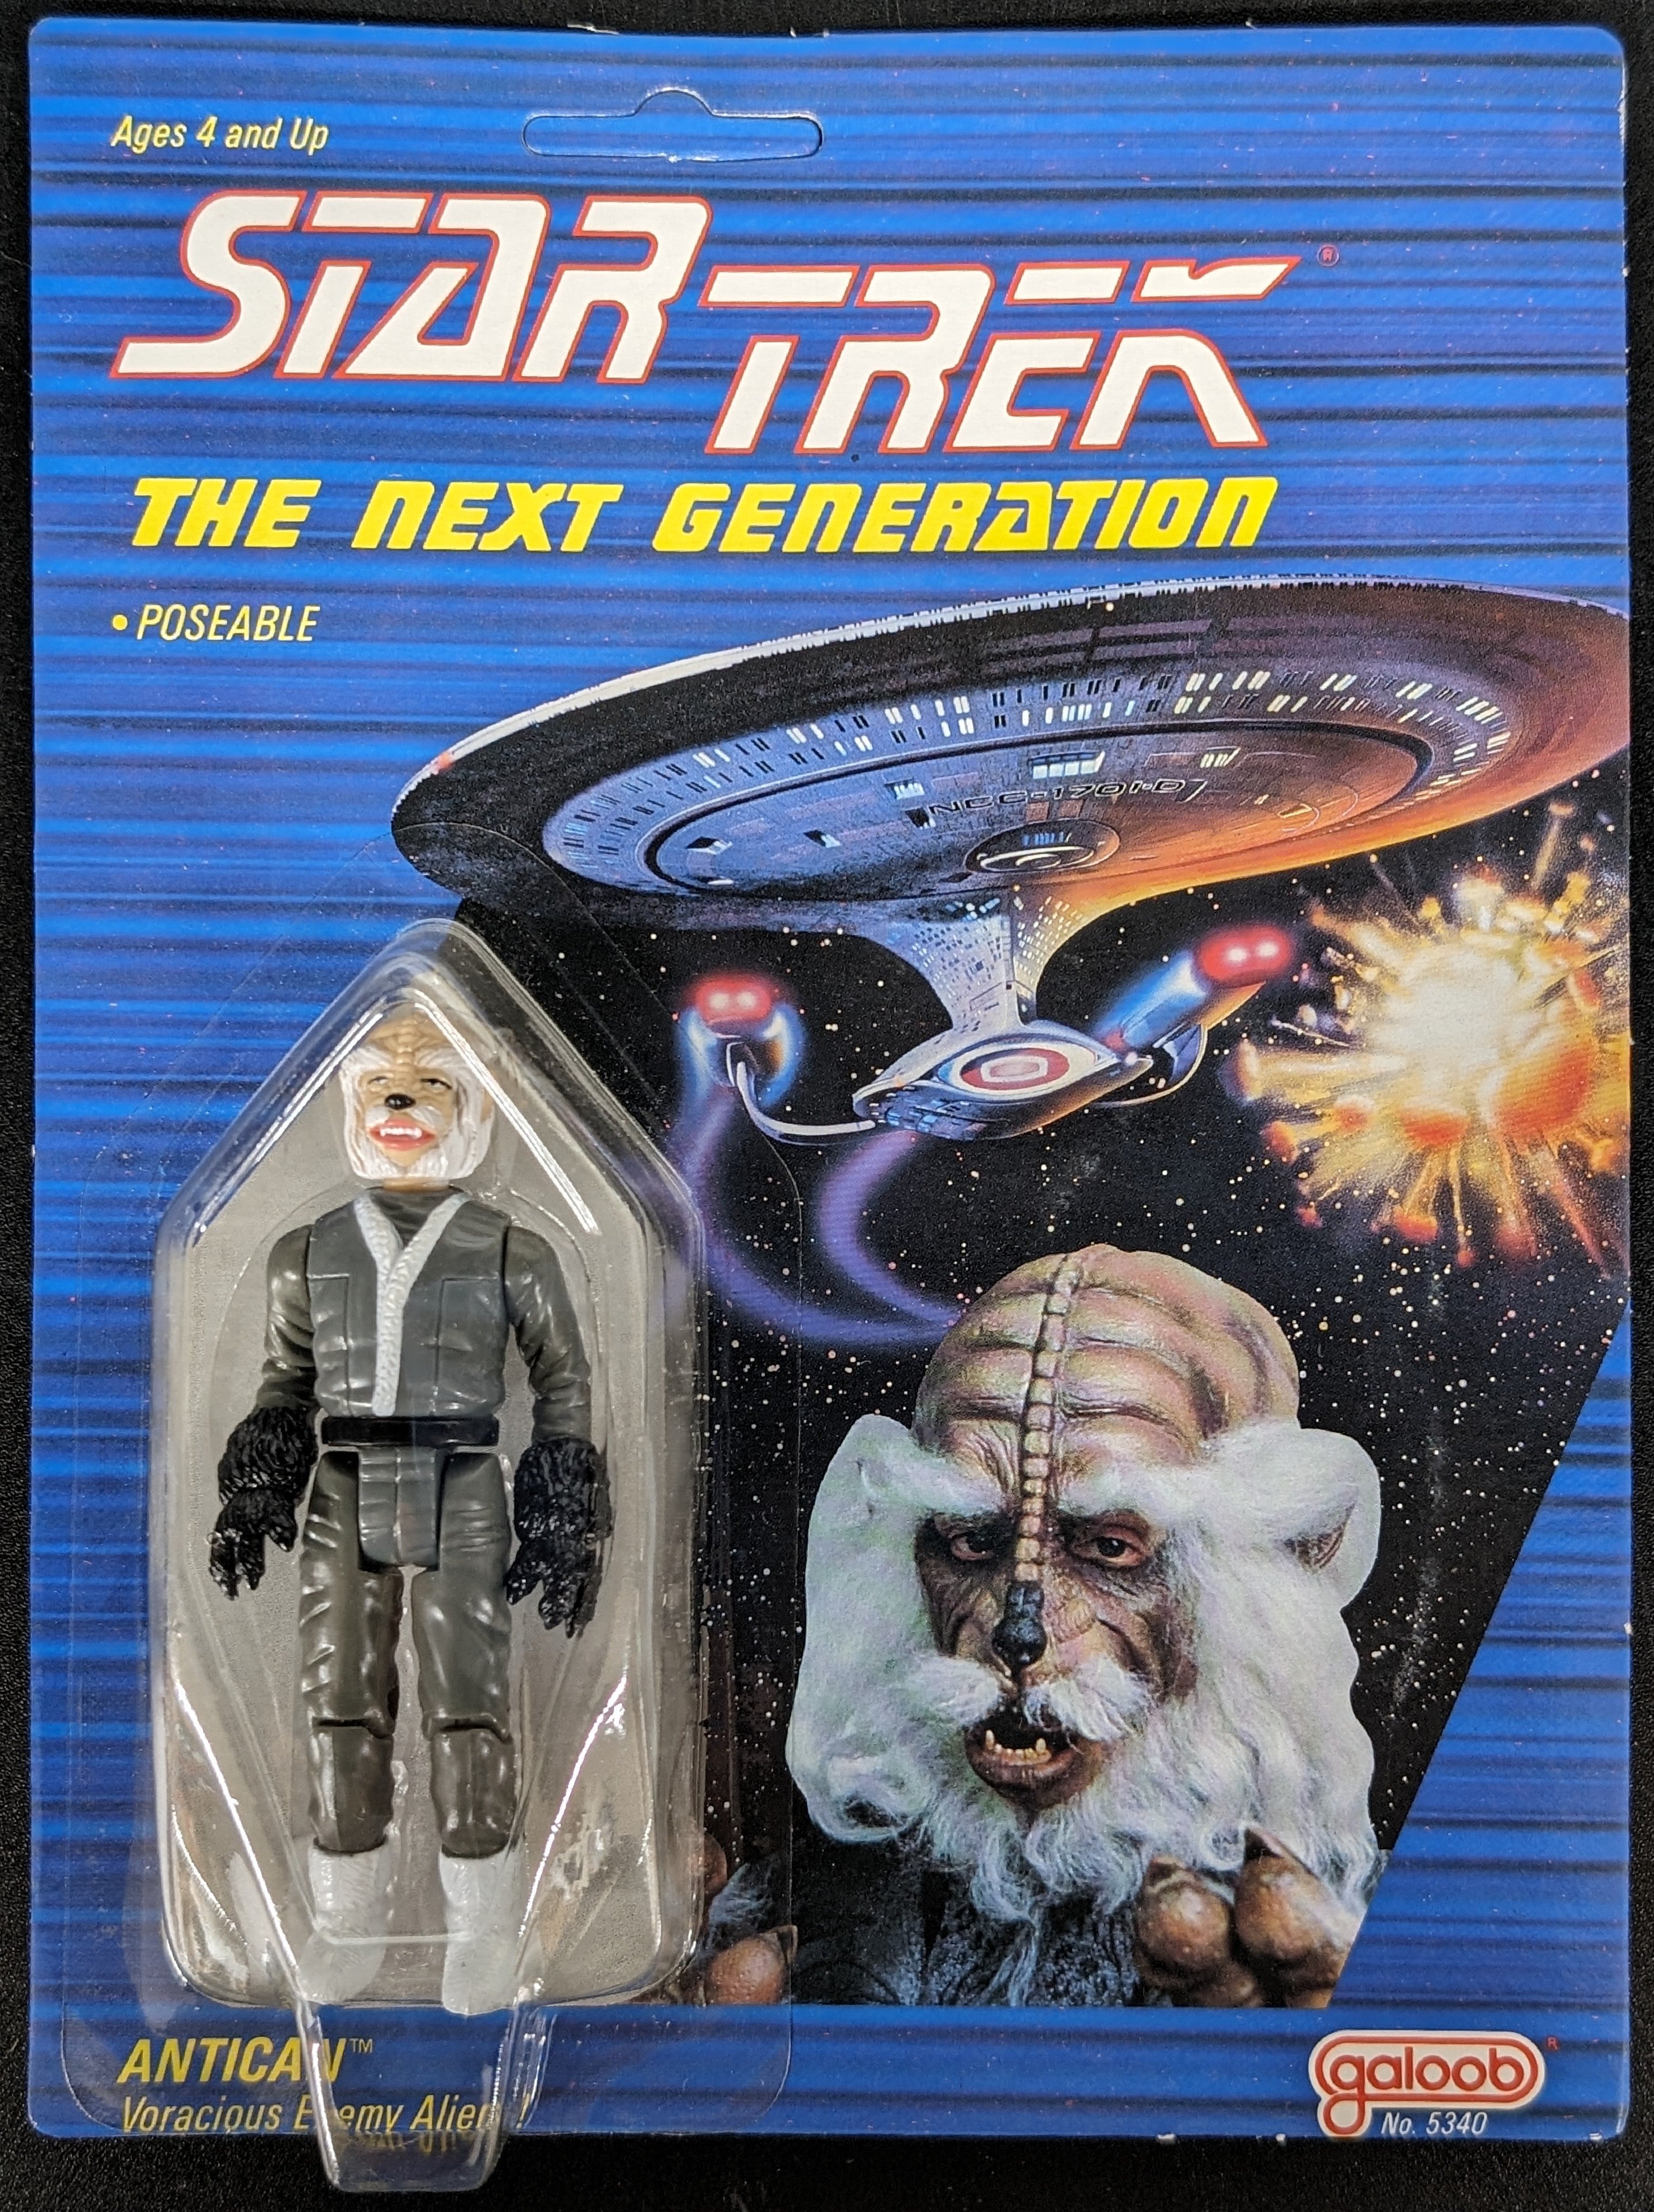 1988 Galoob Star Trek The Next Generation Antican Action Figure